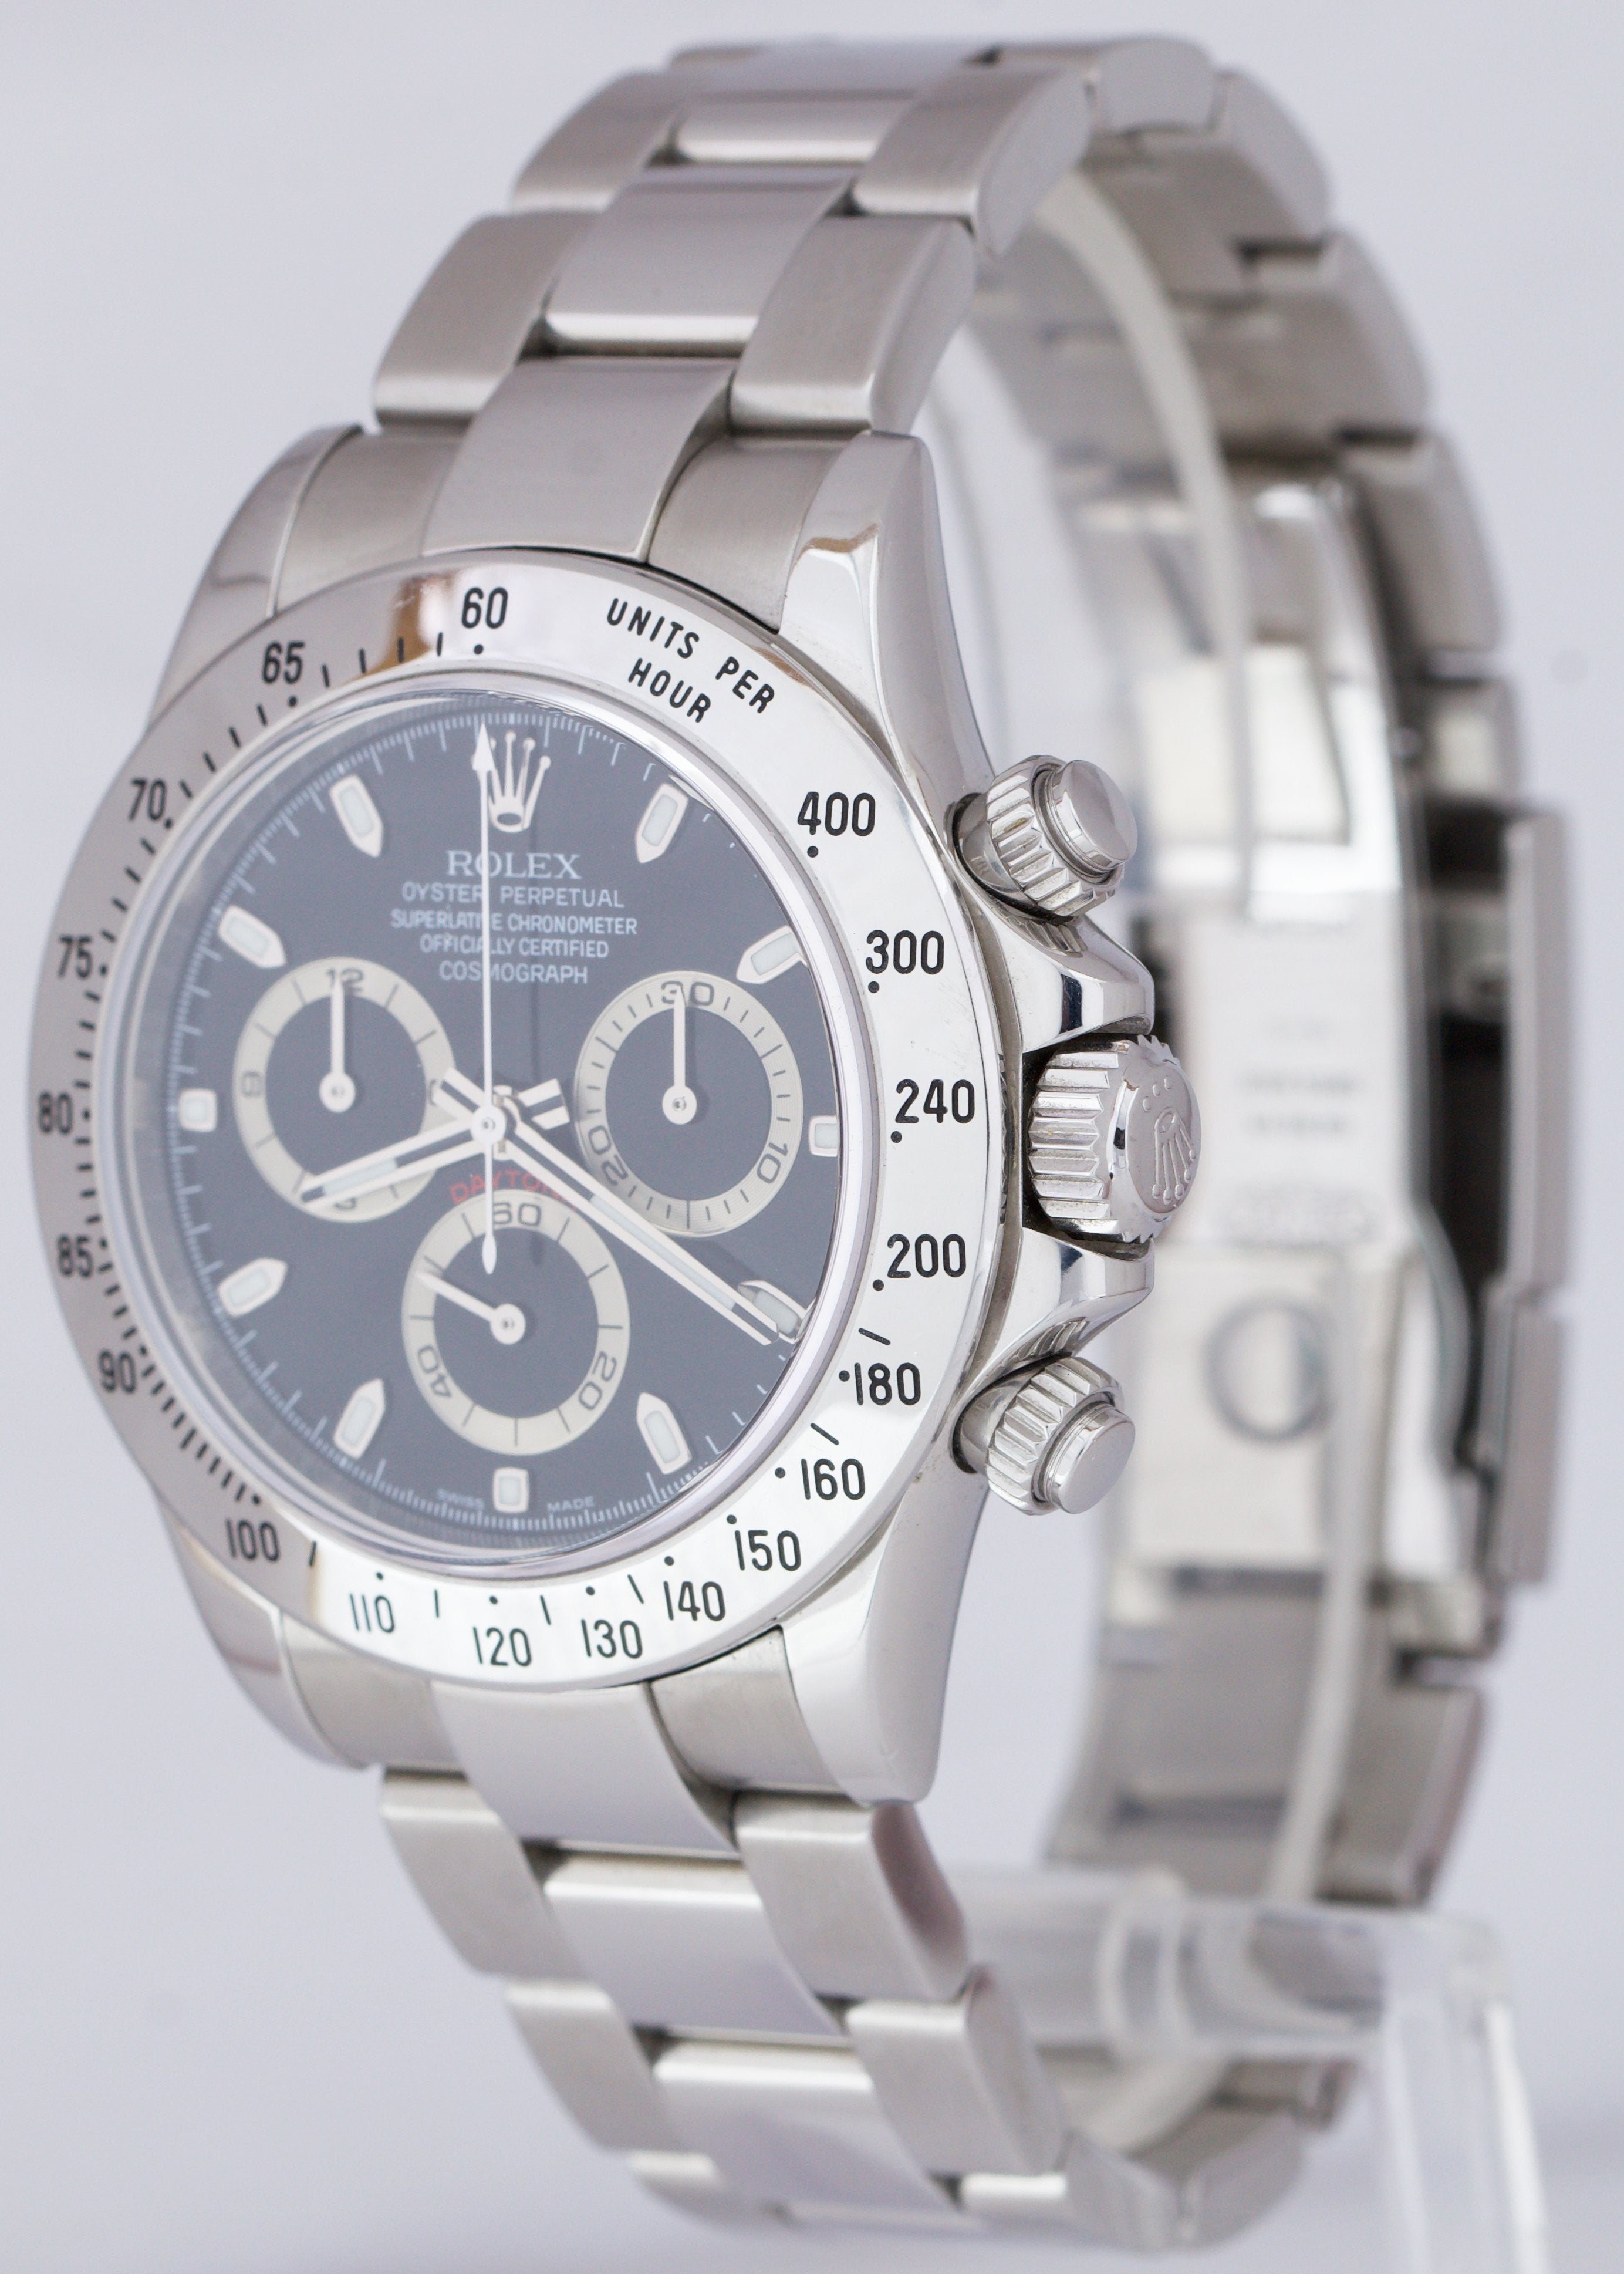 2003 UNPOL. Rolex Daytona Cosmograph Black Stainless Steel 40mm Watch 116520 B+P